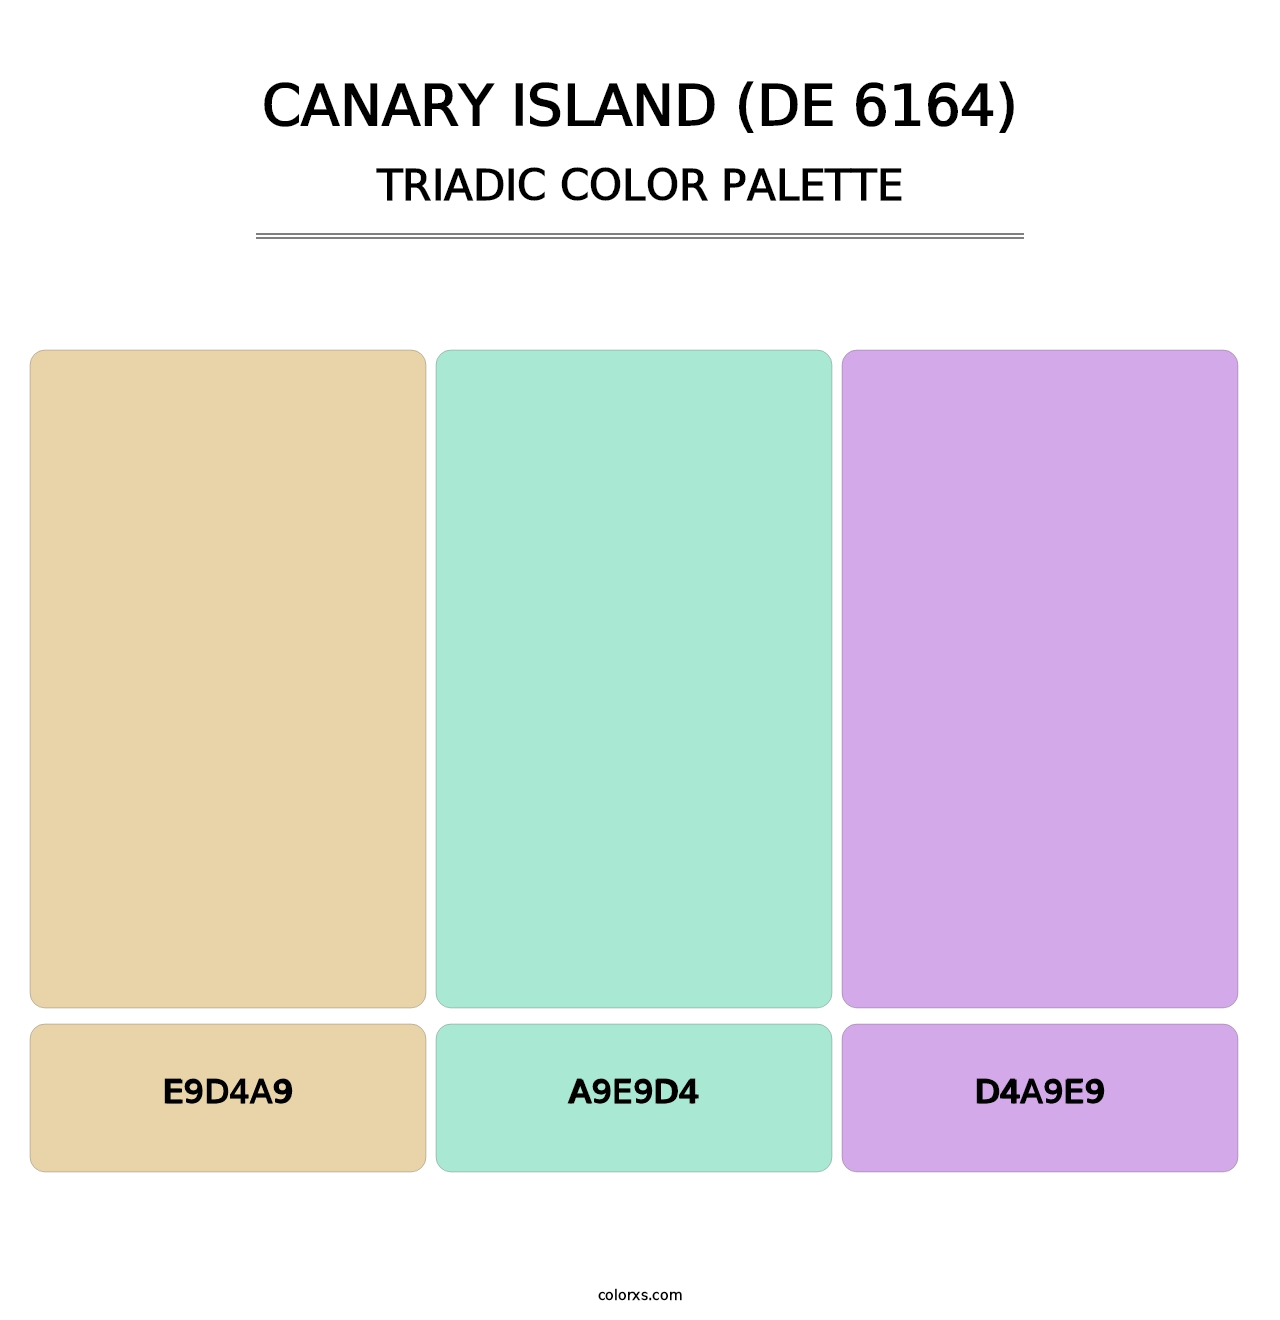 Canary Island (DE 6164) - Triadic Color Palette